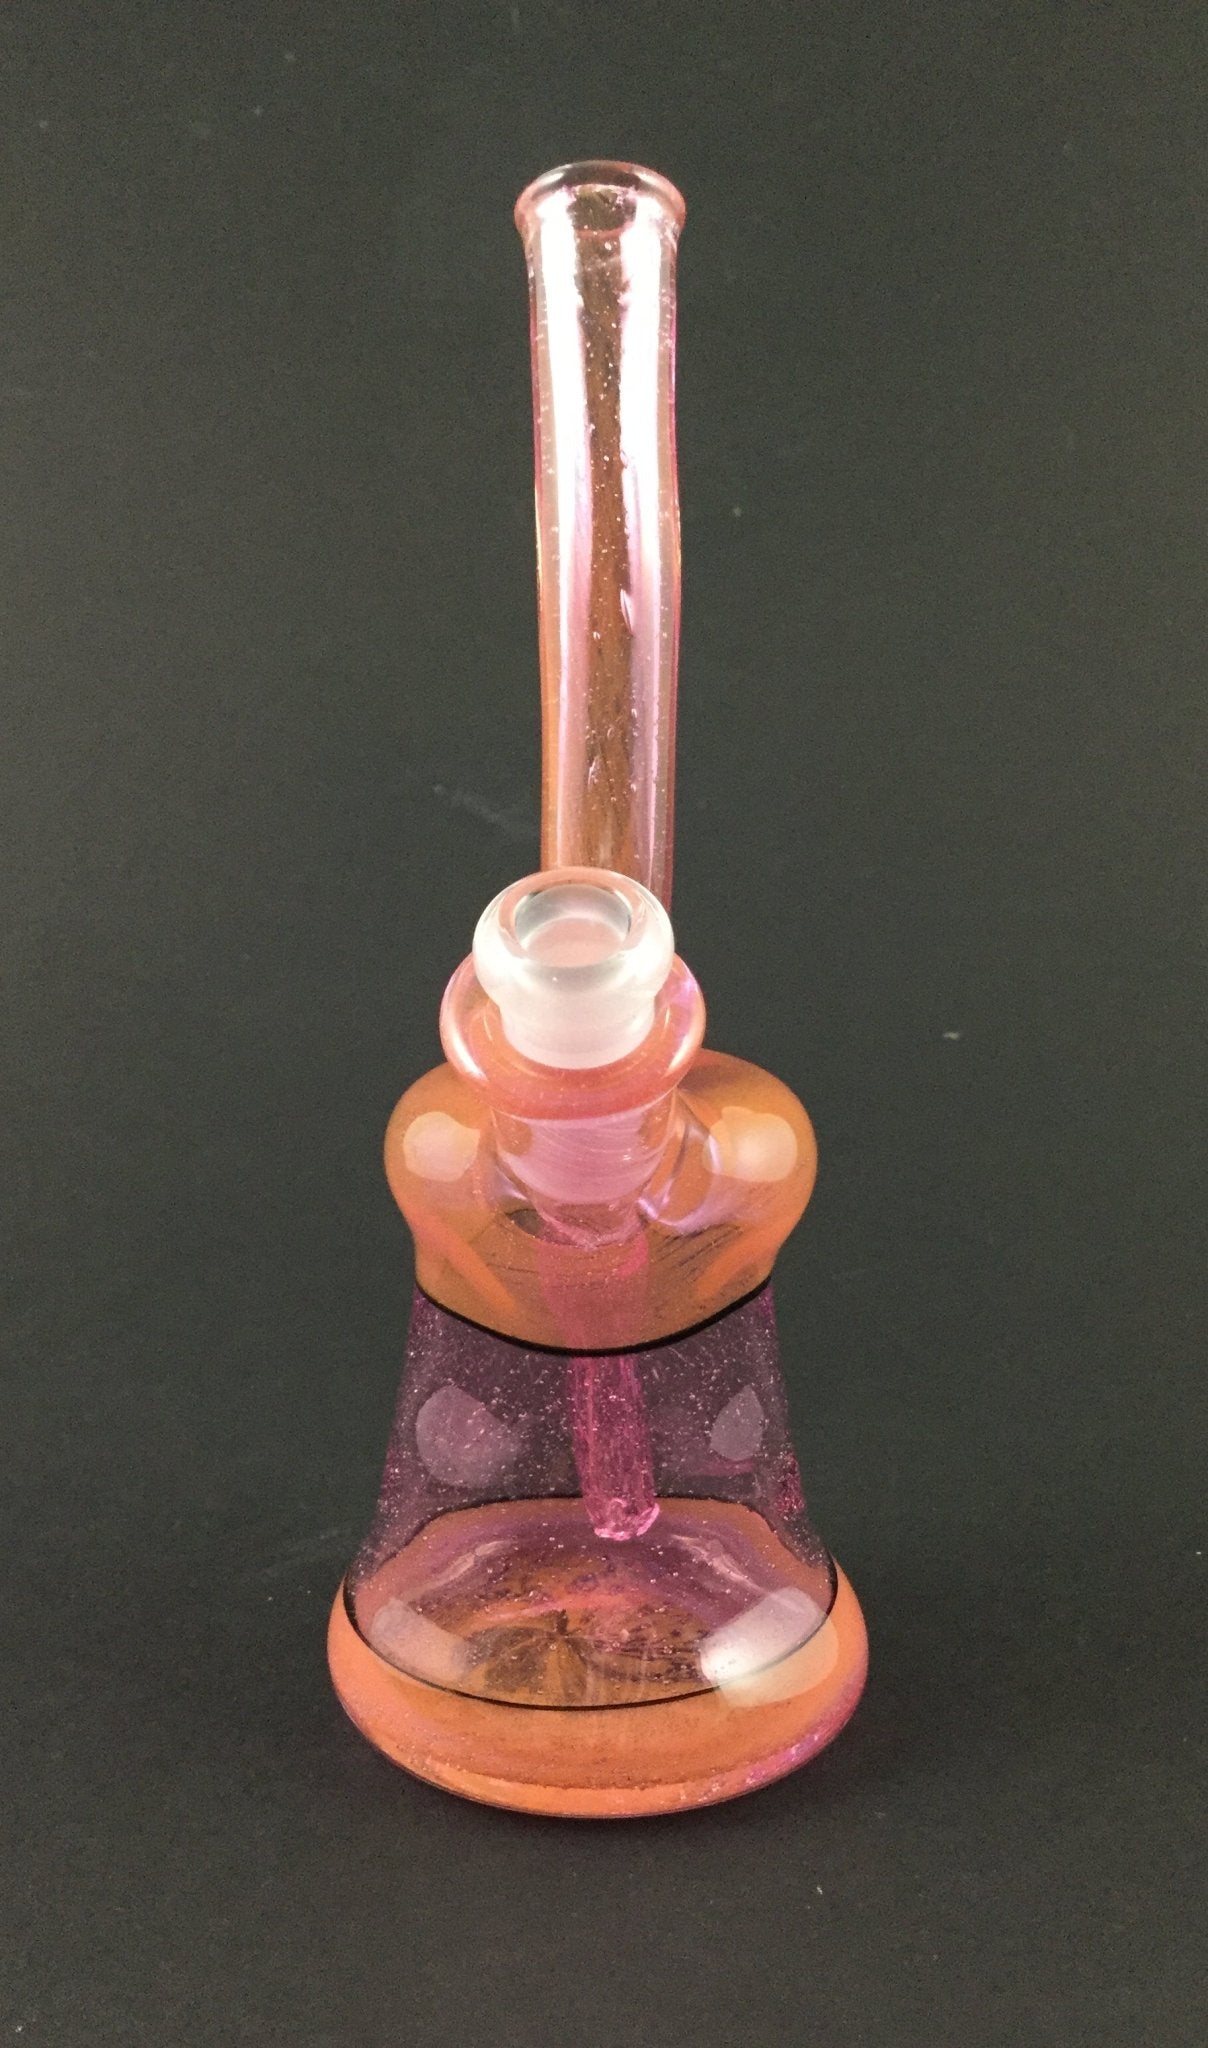 Mac White Glass - Minitube (Pink Fume) - @Macelevenglass - HG